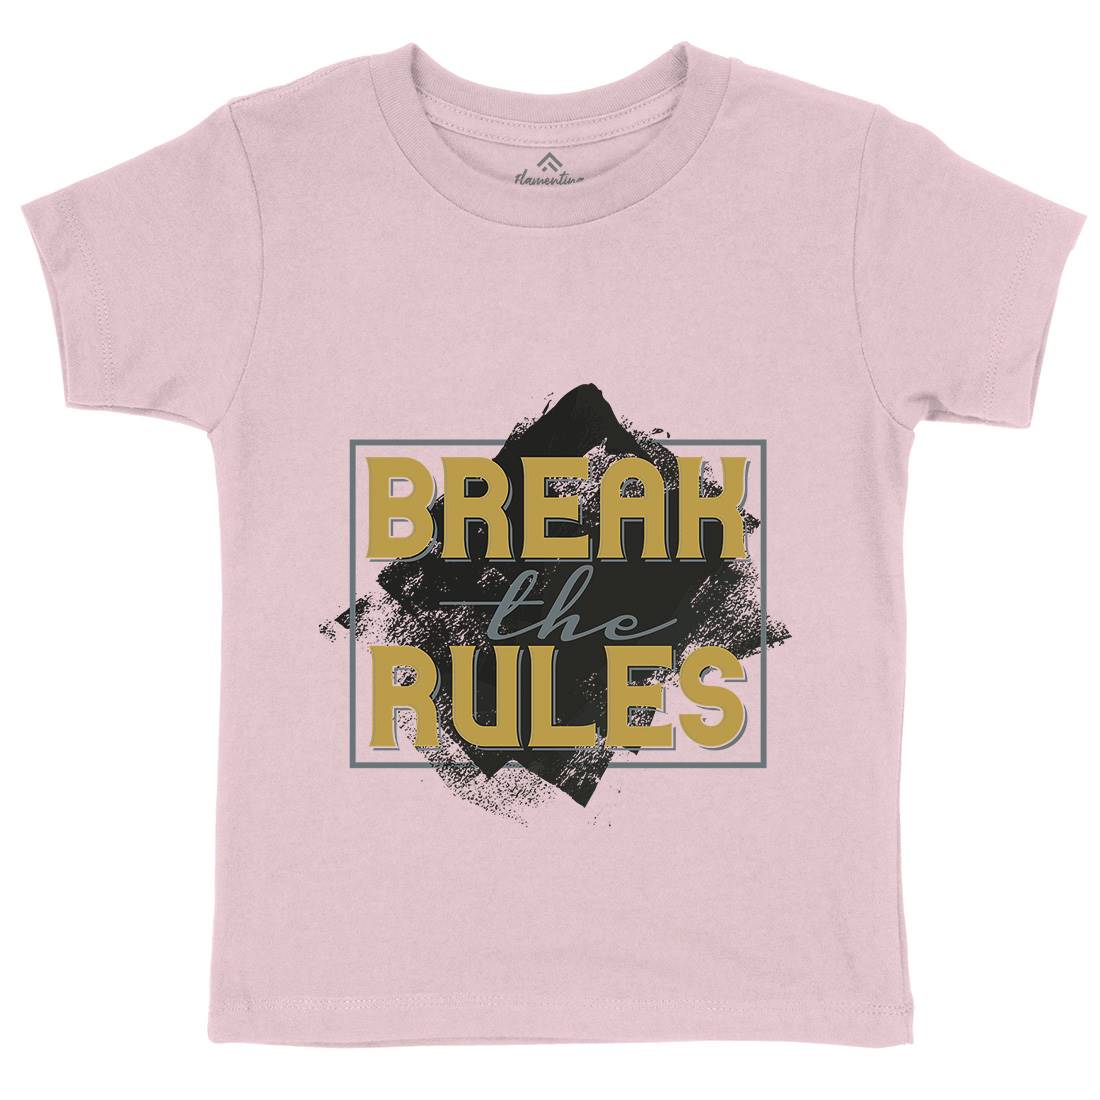 Break The Rules Kids Crew Neck T-Shirt Retro B291